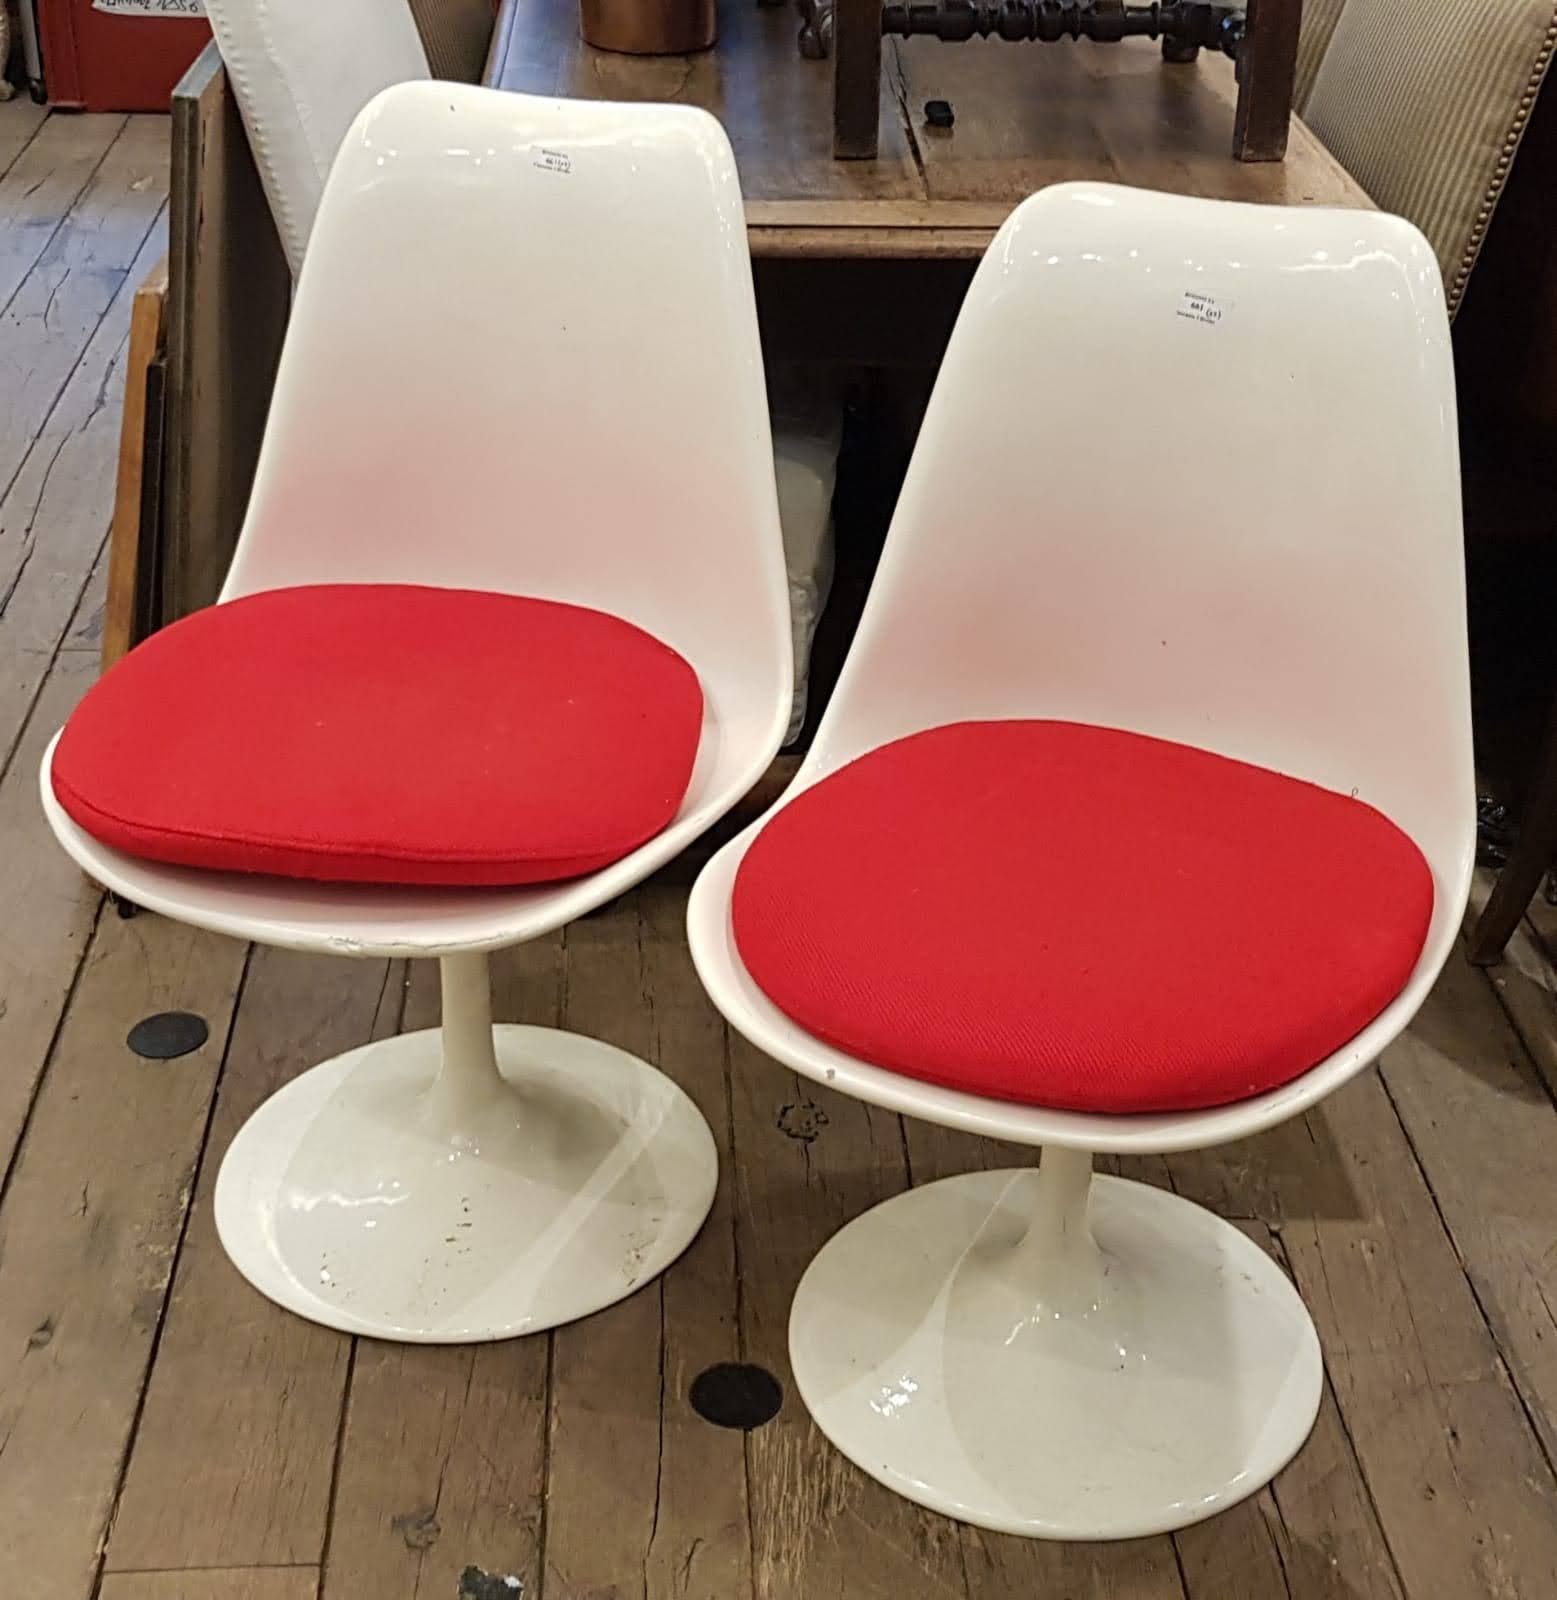 Null 
克诺尔国际（归属）公司

一对郁金香椅子，白色铸铁腿和可拆卸的红色坐垫。

高86厘米 - 长50厘米 - 深37厘米